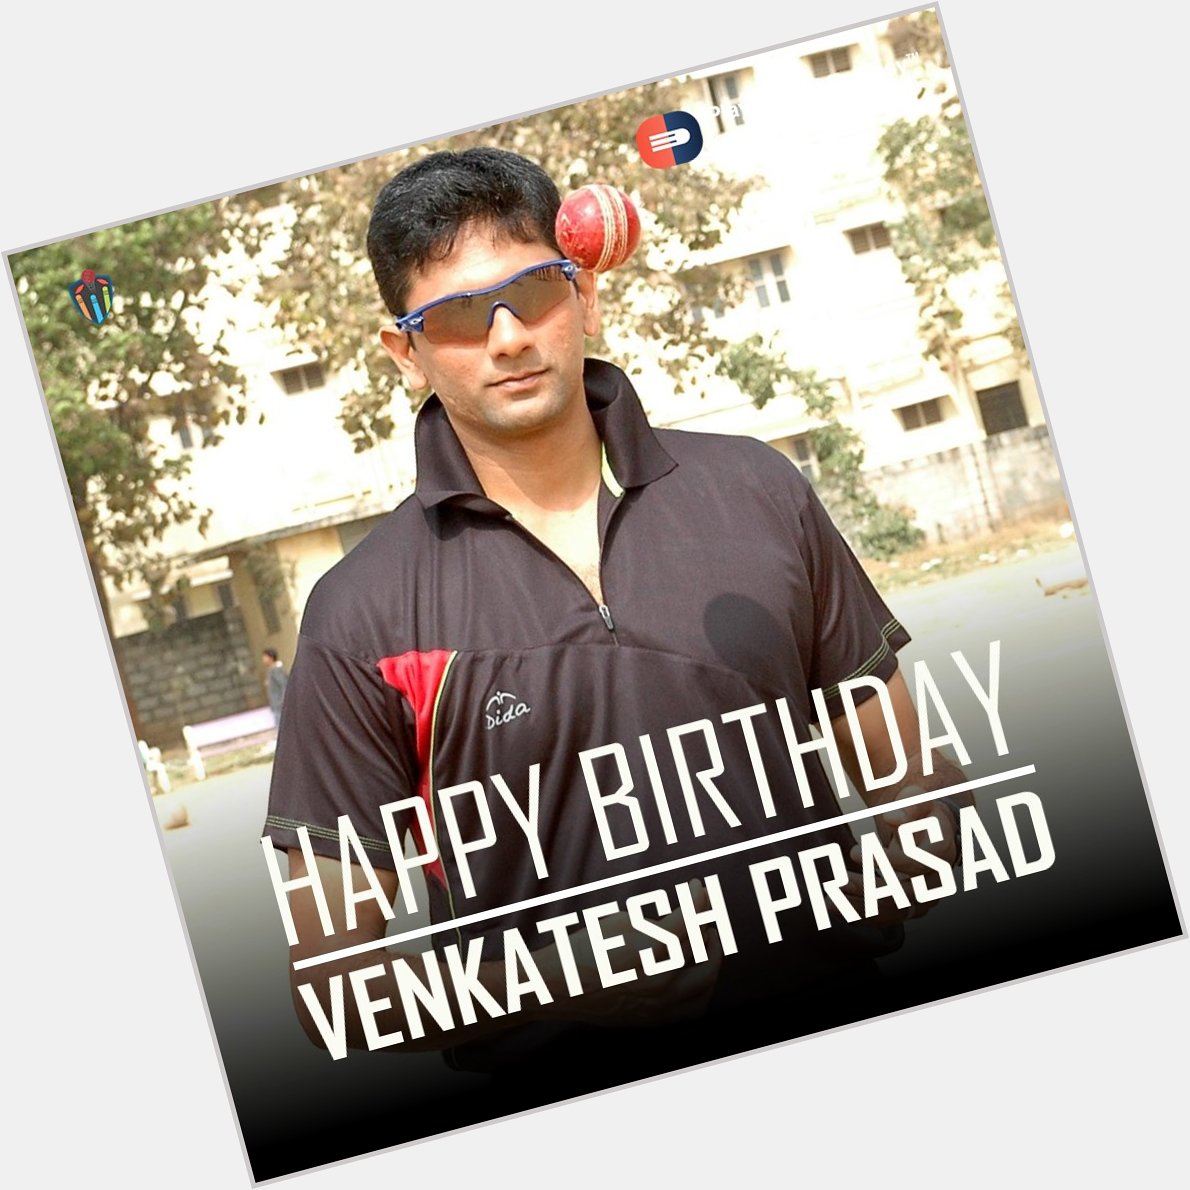 Happy Birthday, Venkatesh Prasad. The Indian cricketer turns 48 today. 